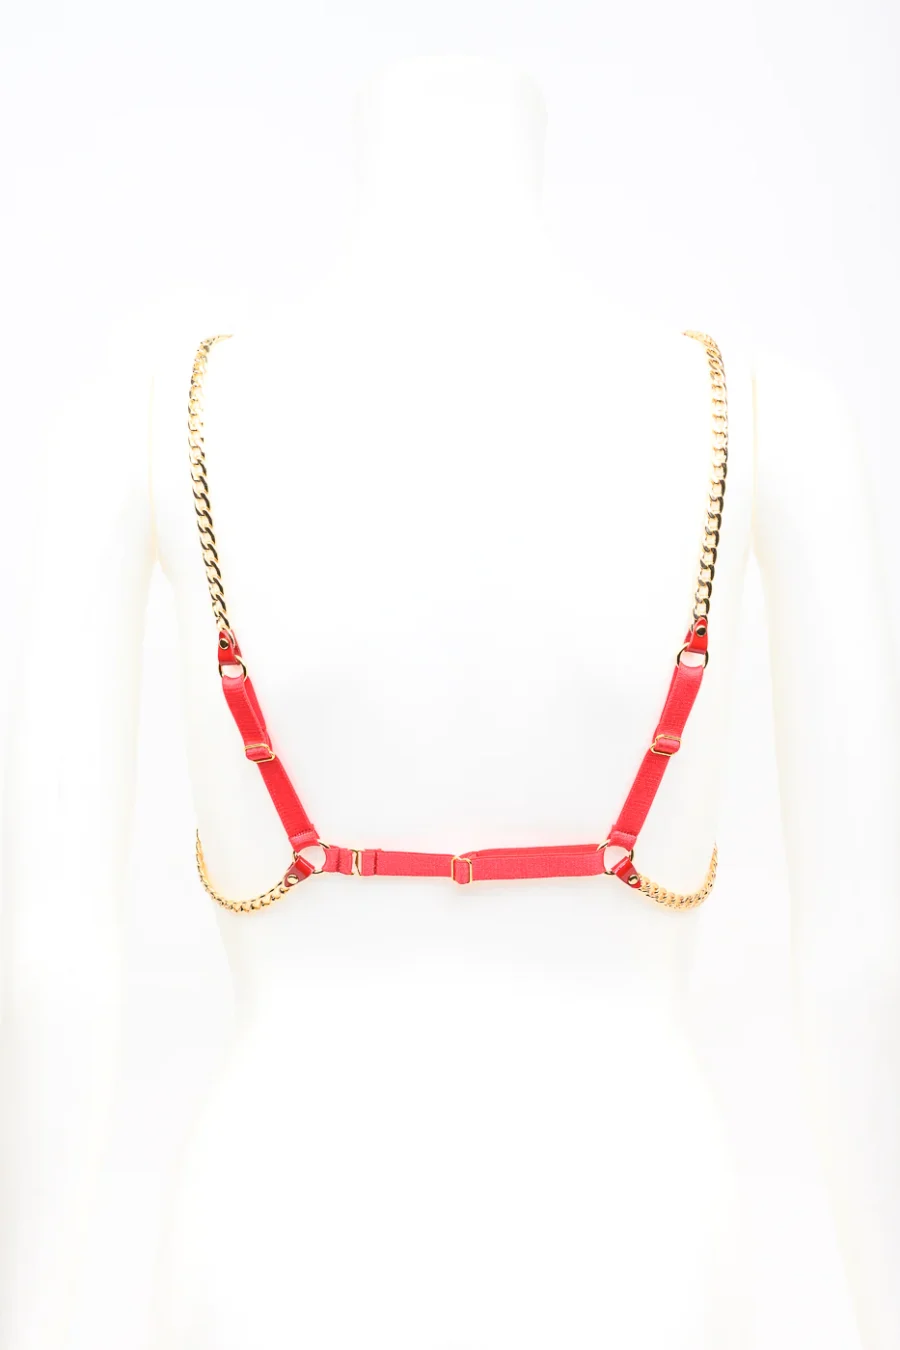 Fraulein Kink Roja Chain Harness 3